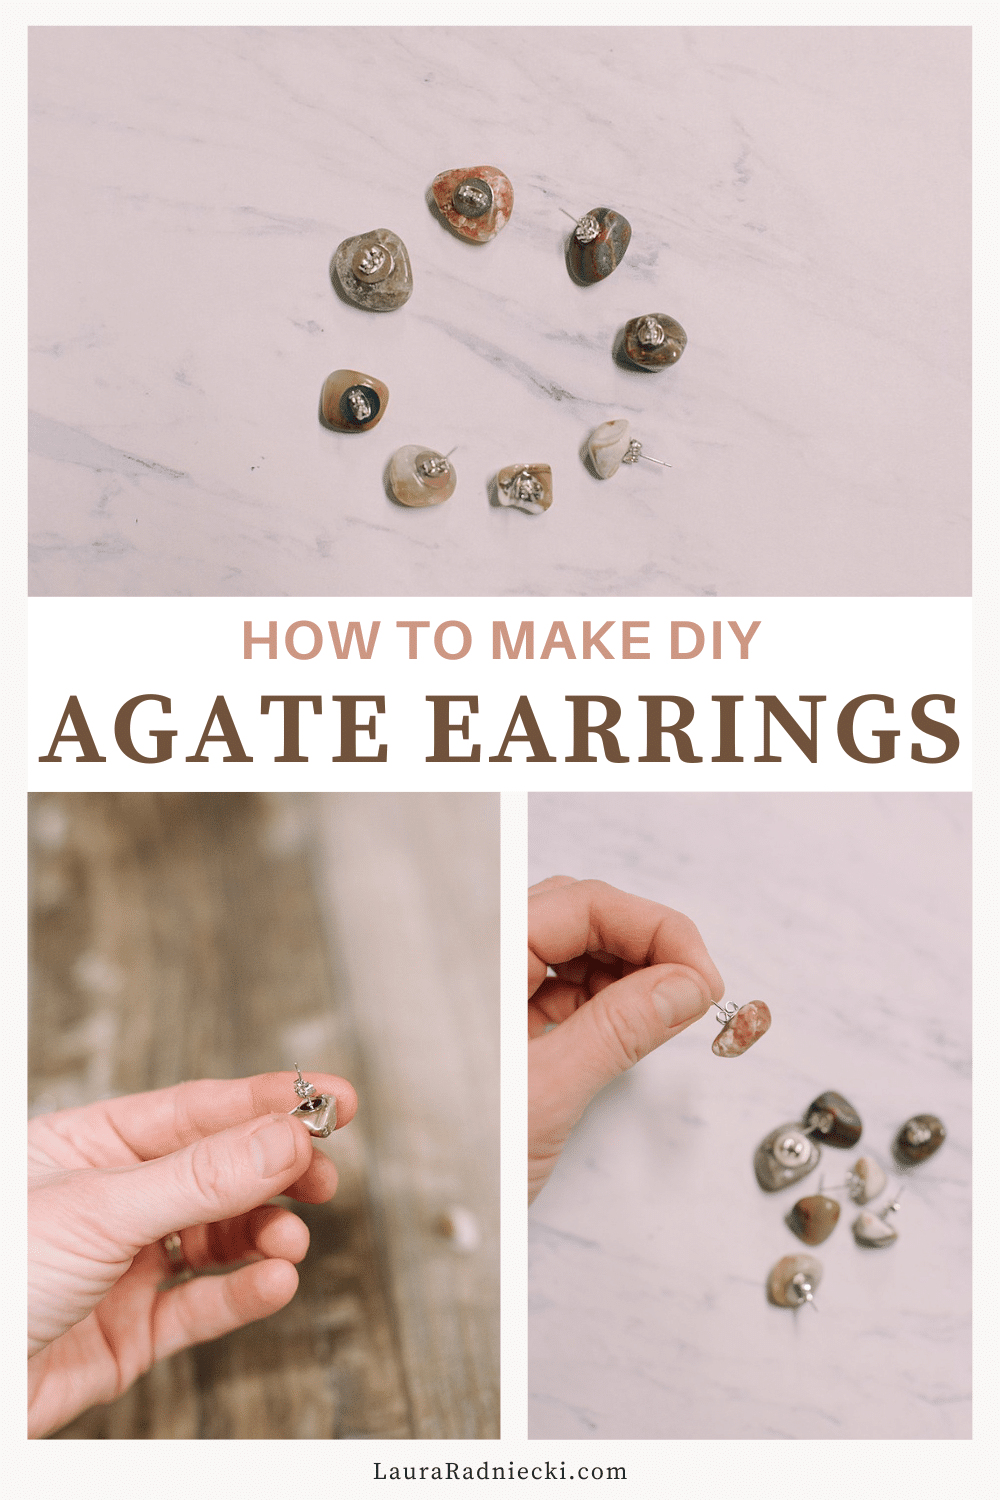 How to Make Agate Earrings